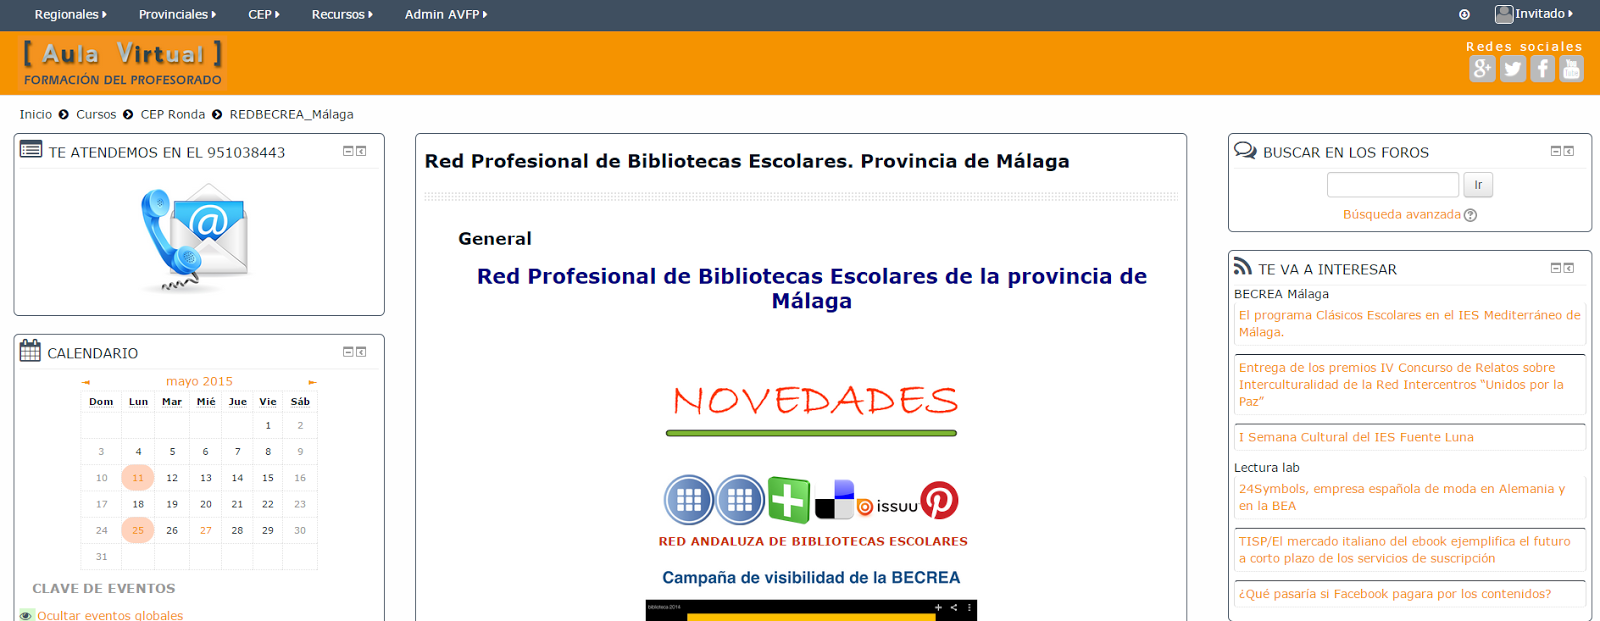 RED PROFESIONAL DE BIBLIOTECAS ESCOLARES. PROVINCIA DE MÁLAGA